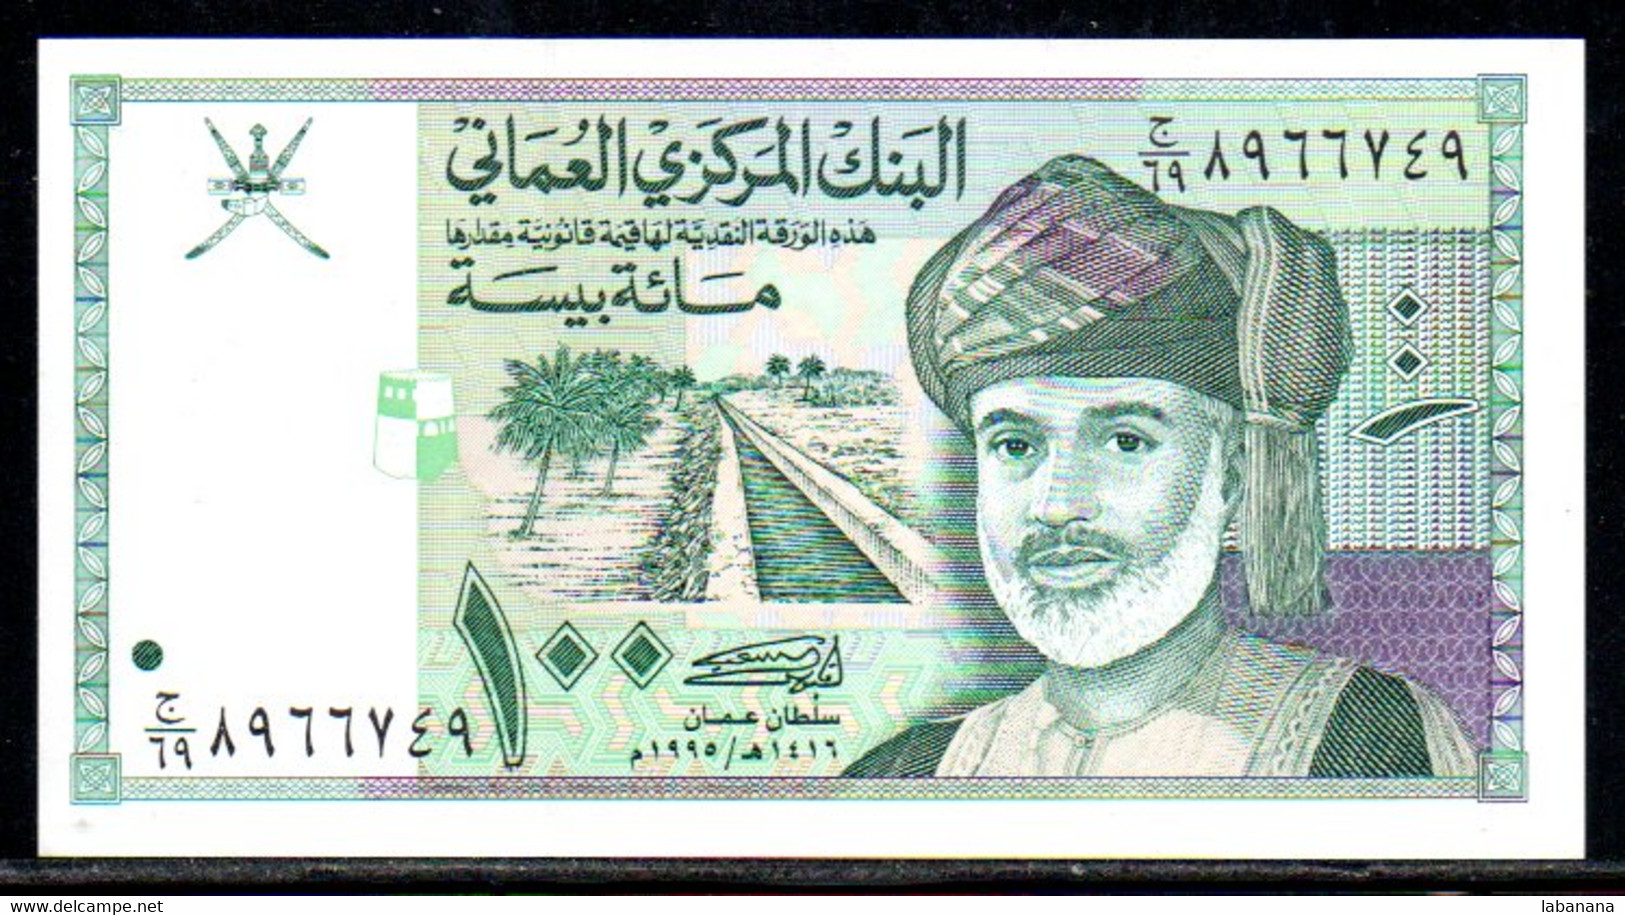 659-Oman 100 Baisa 1995 - Oman